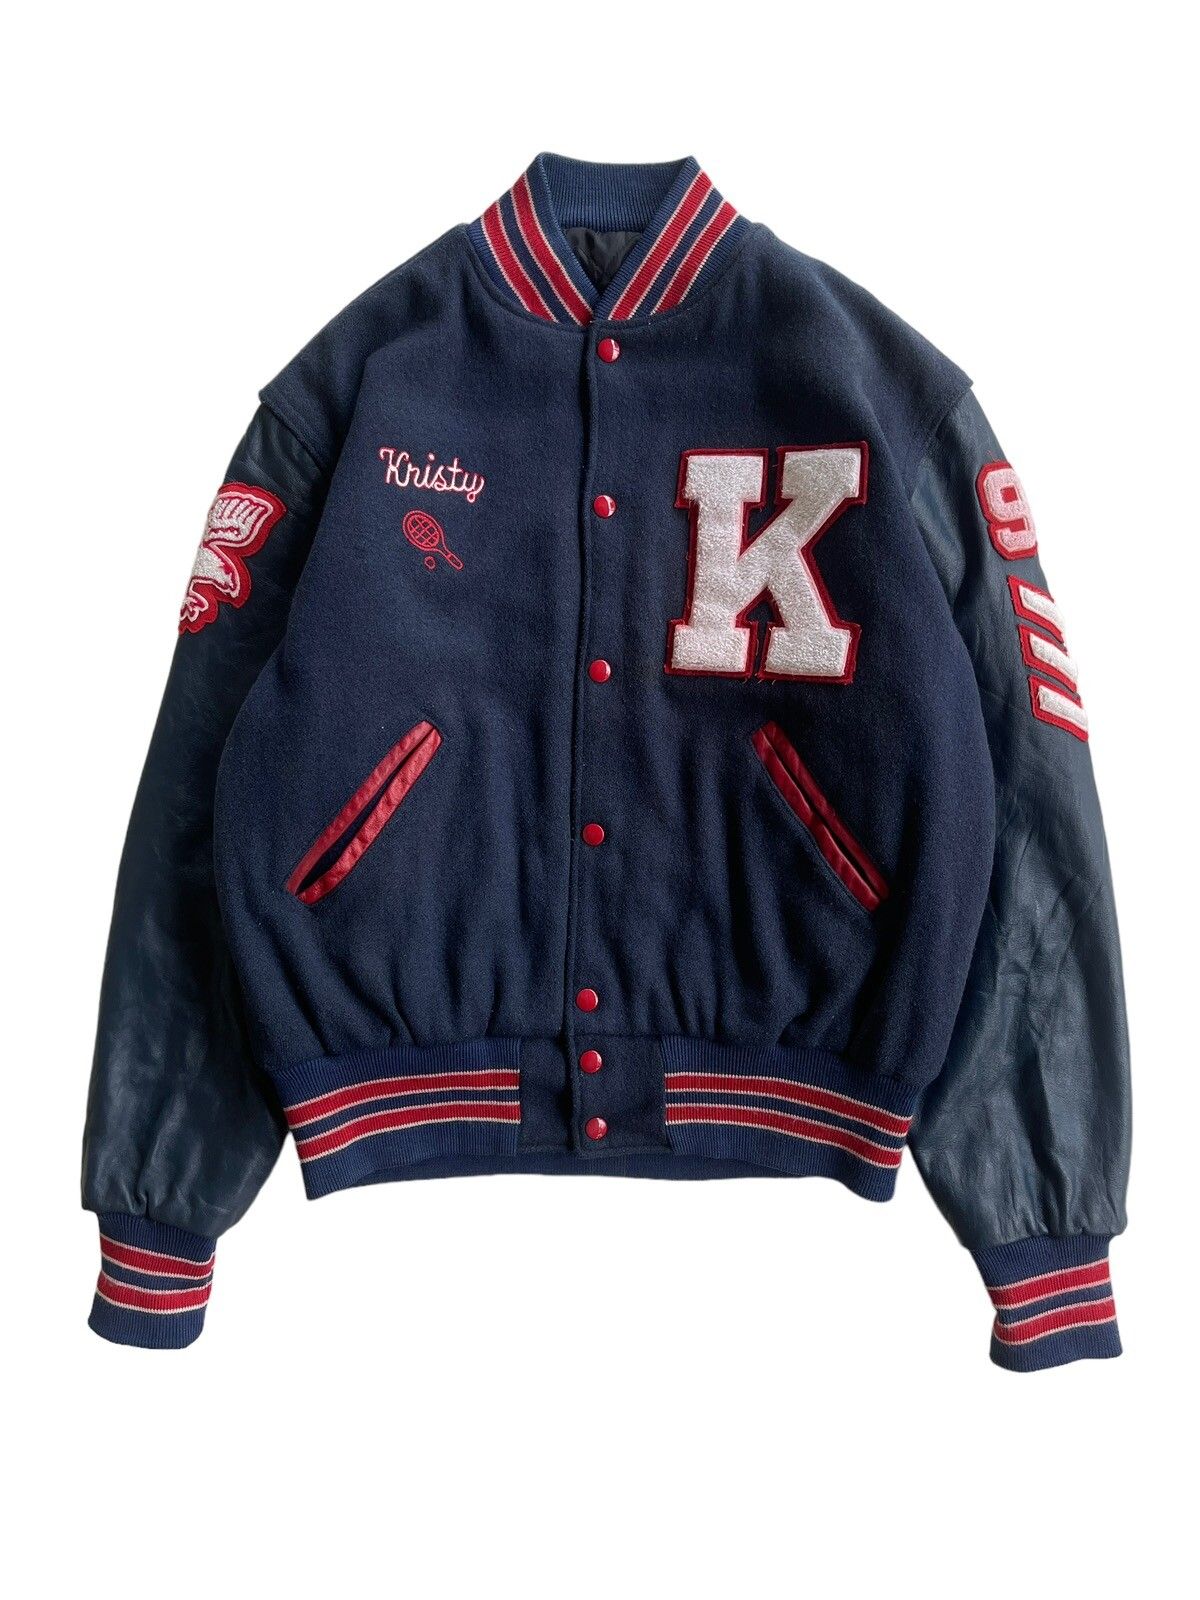 Vintage Vintage 70s Delong Kennedy Varsity Jacket Size US M / EU 48-50 / 2 - 1 Preview